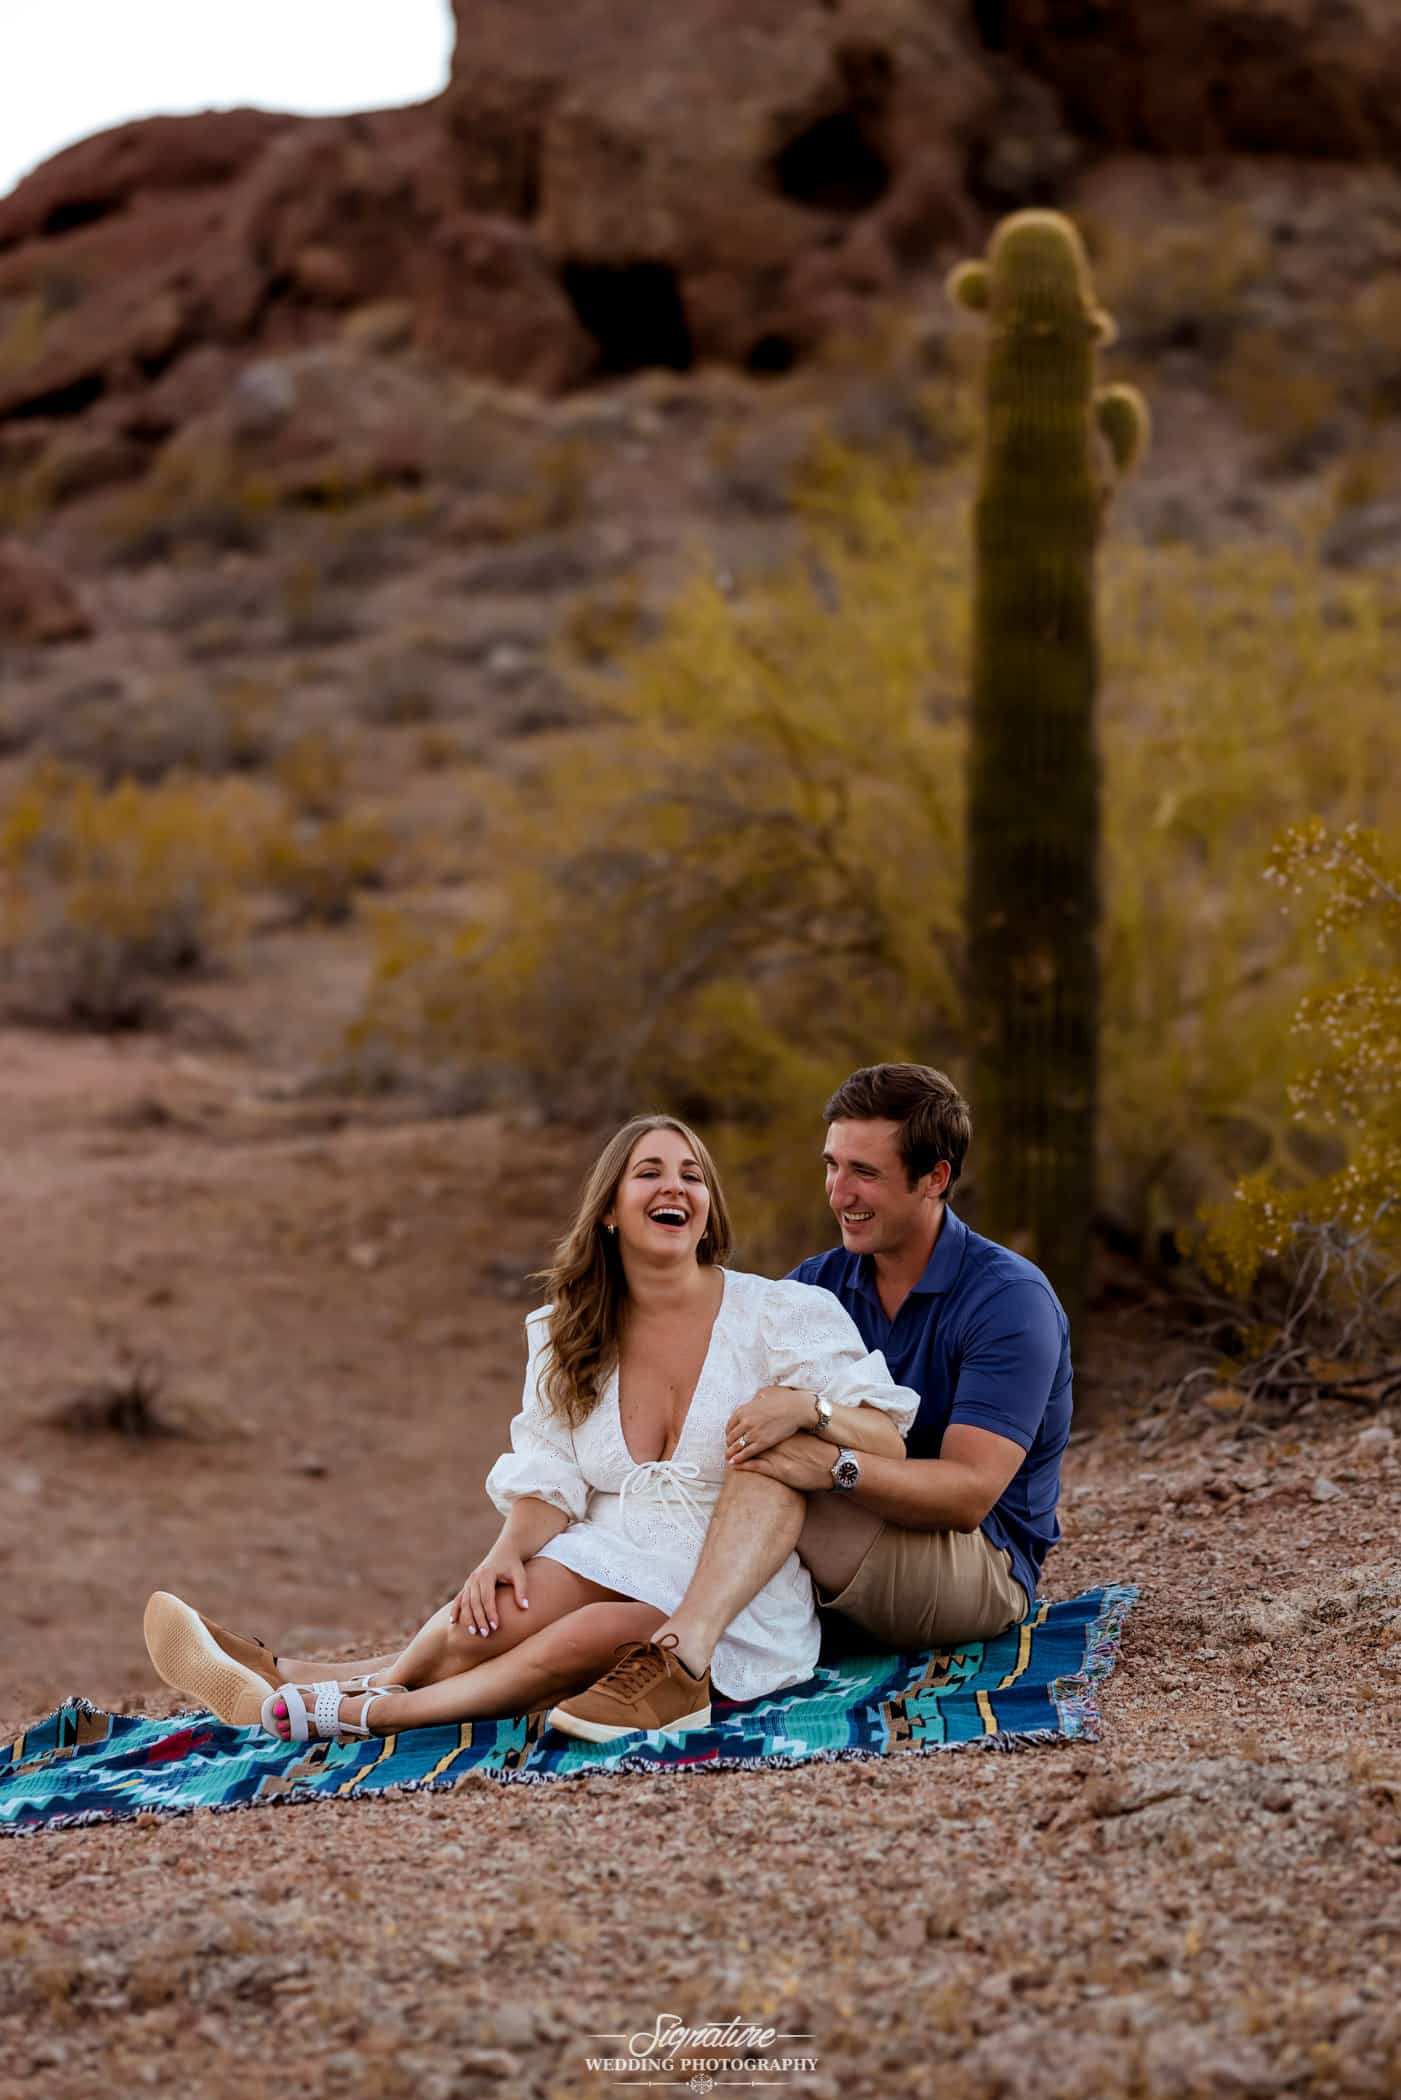 Couple sitting together on blanket in desert